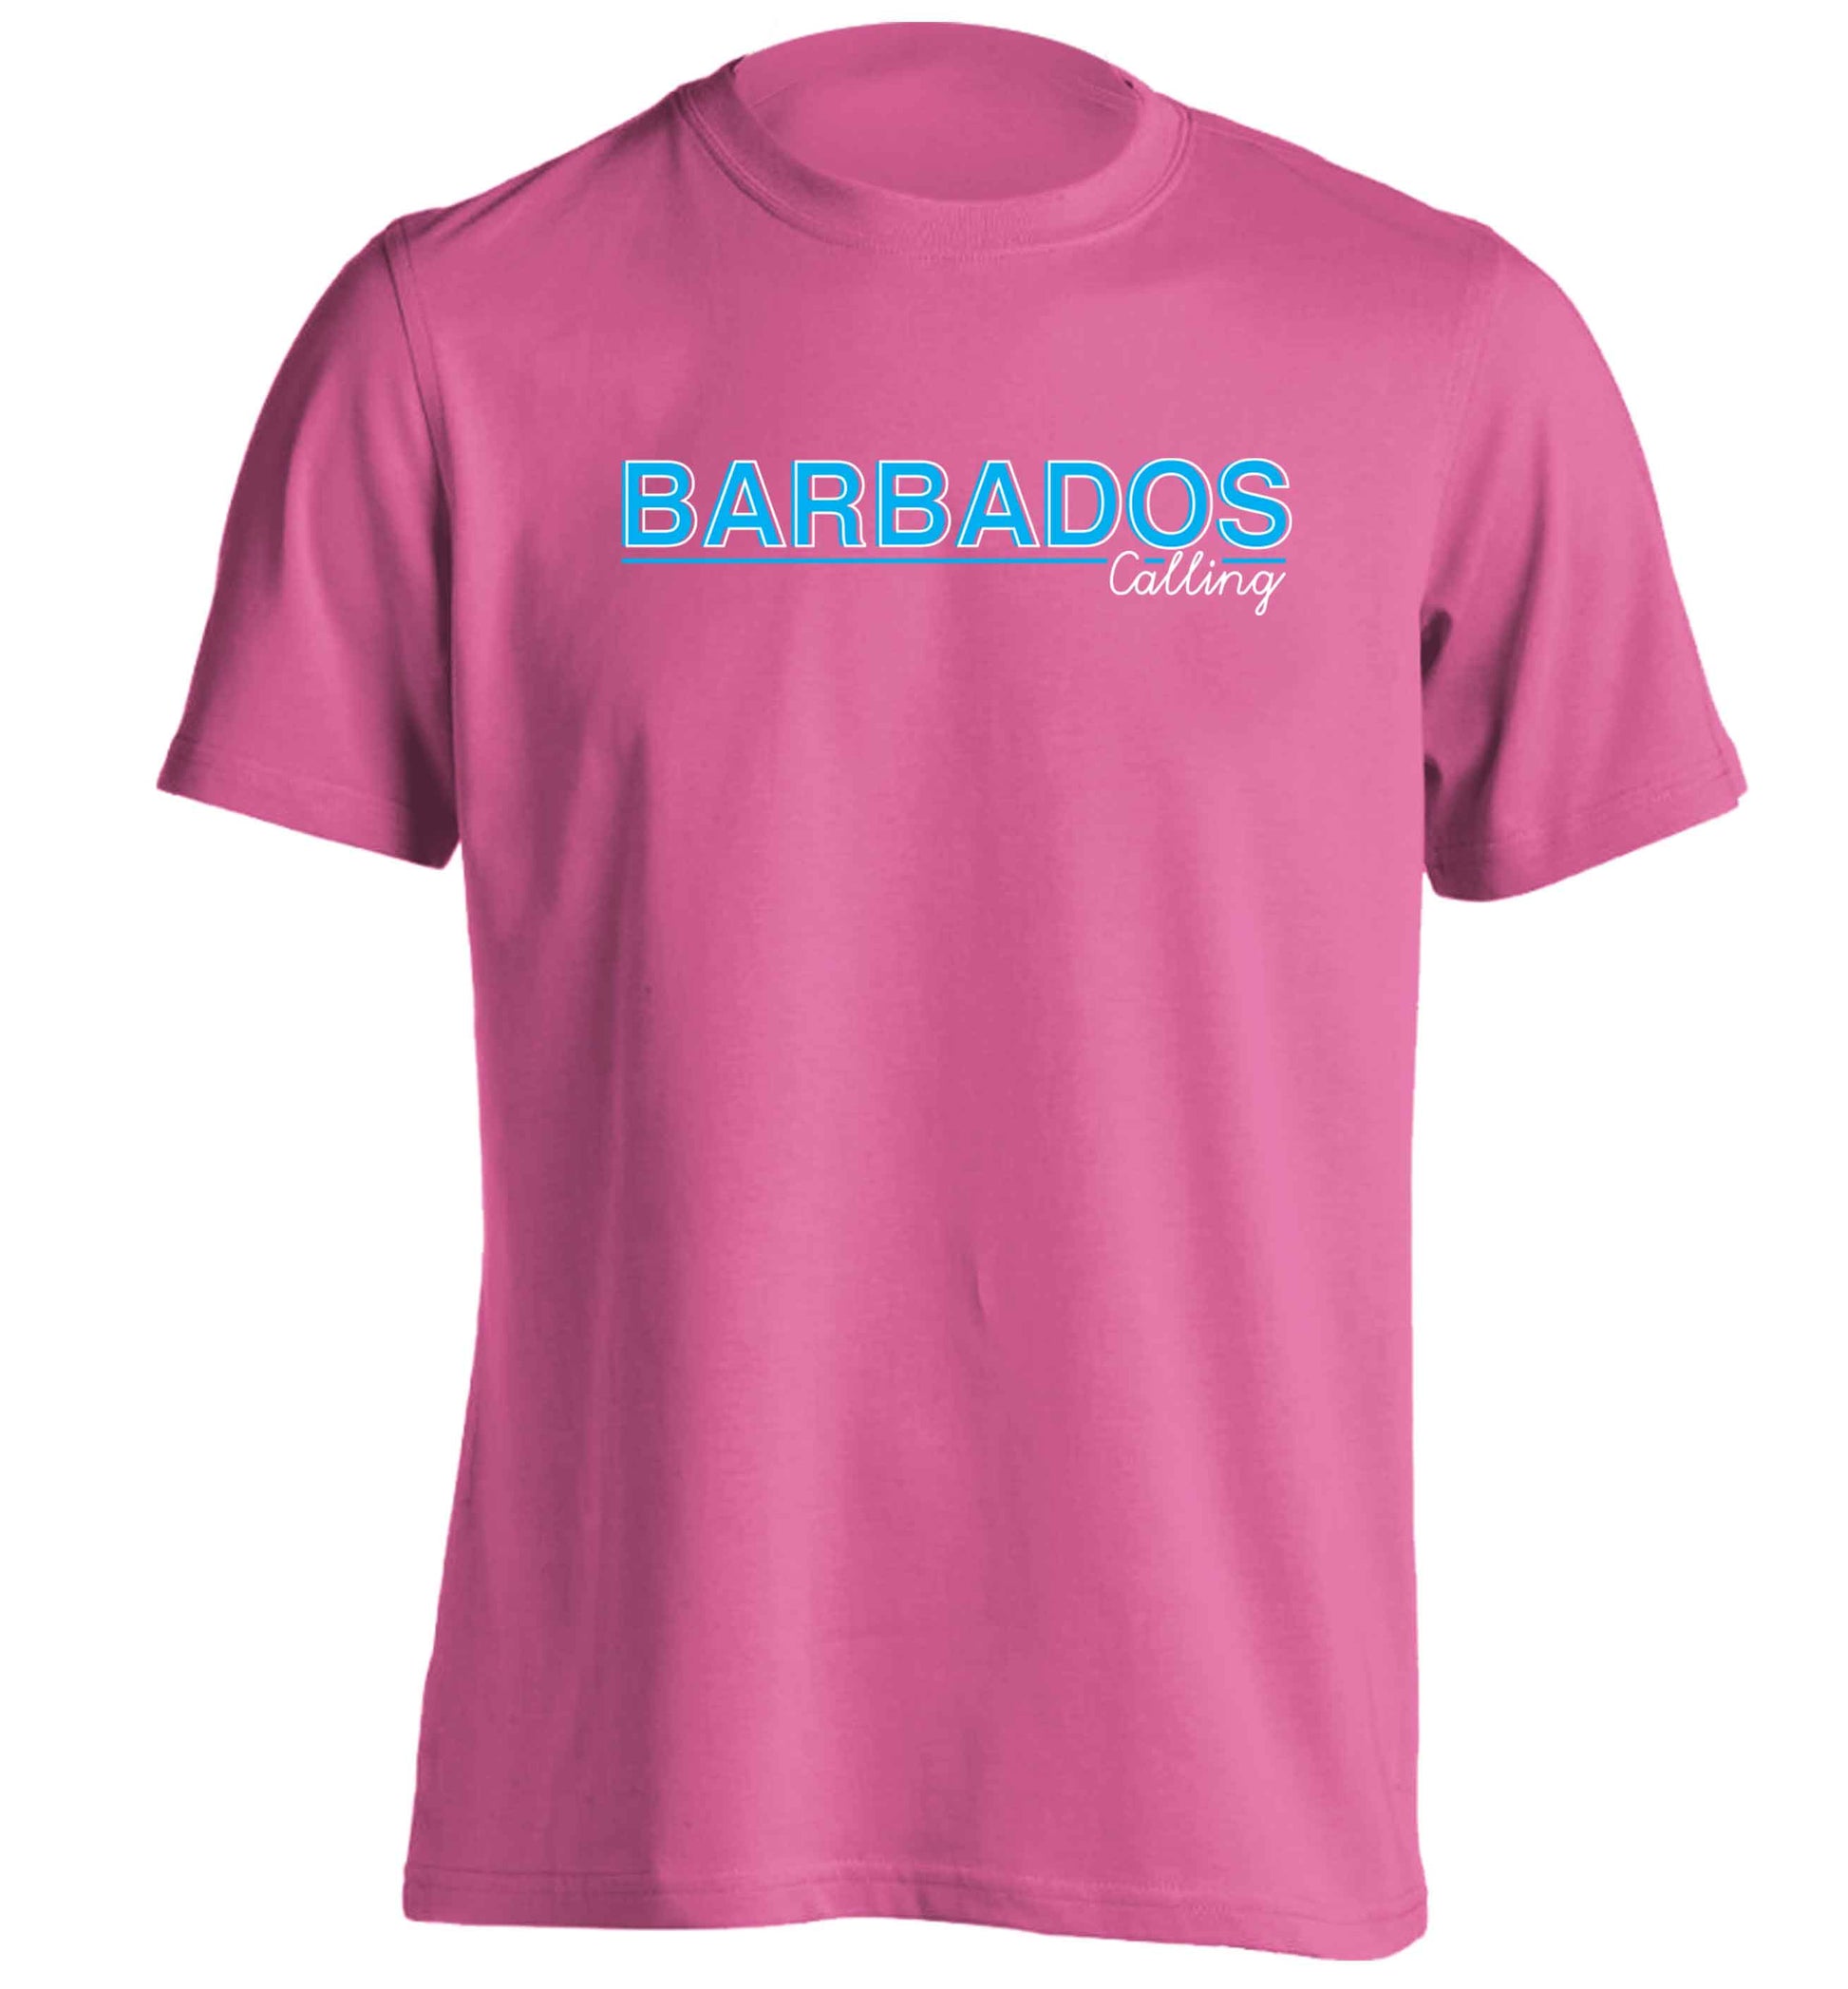 Barbados calling adults unisex pink Tshirt 2XL